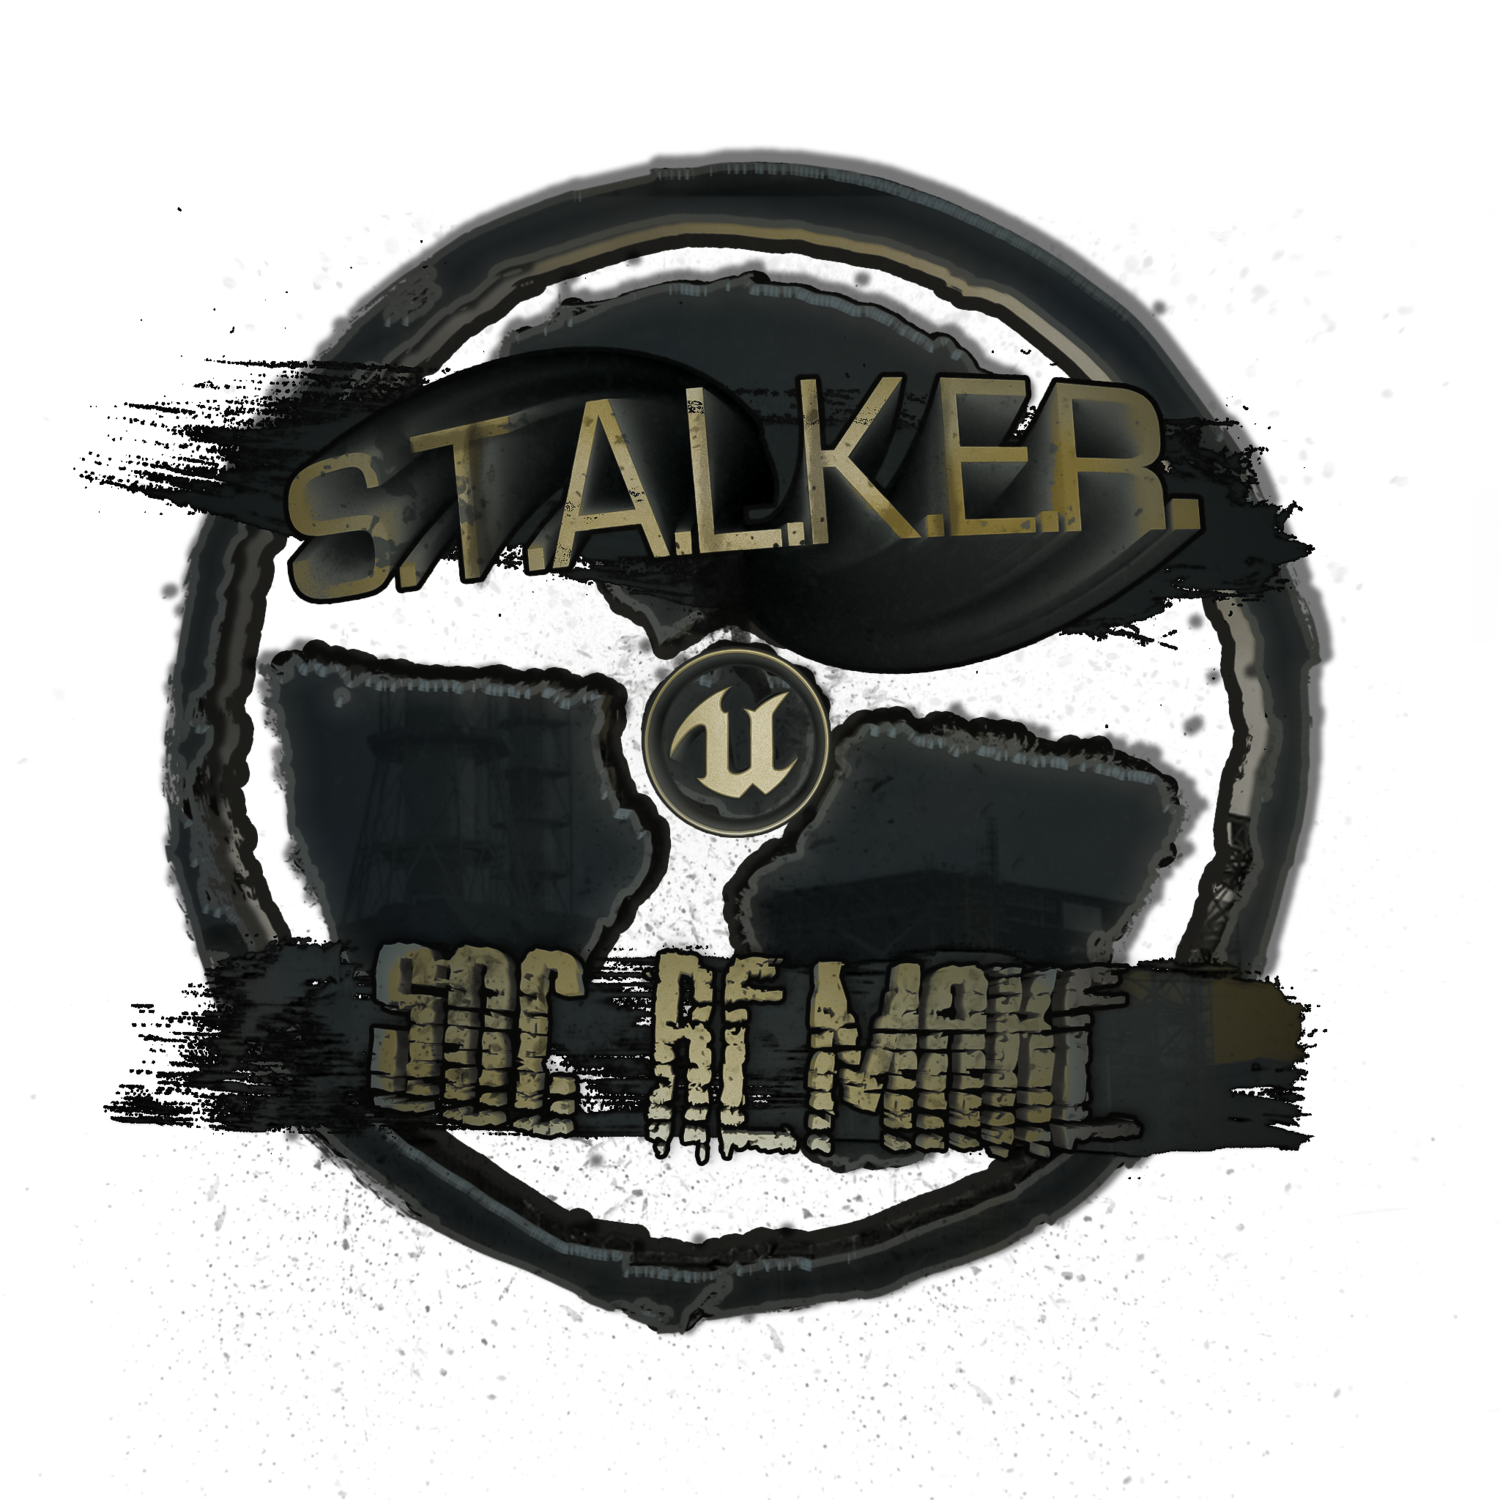 www.stalker-ue4.com